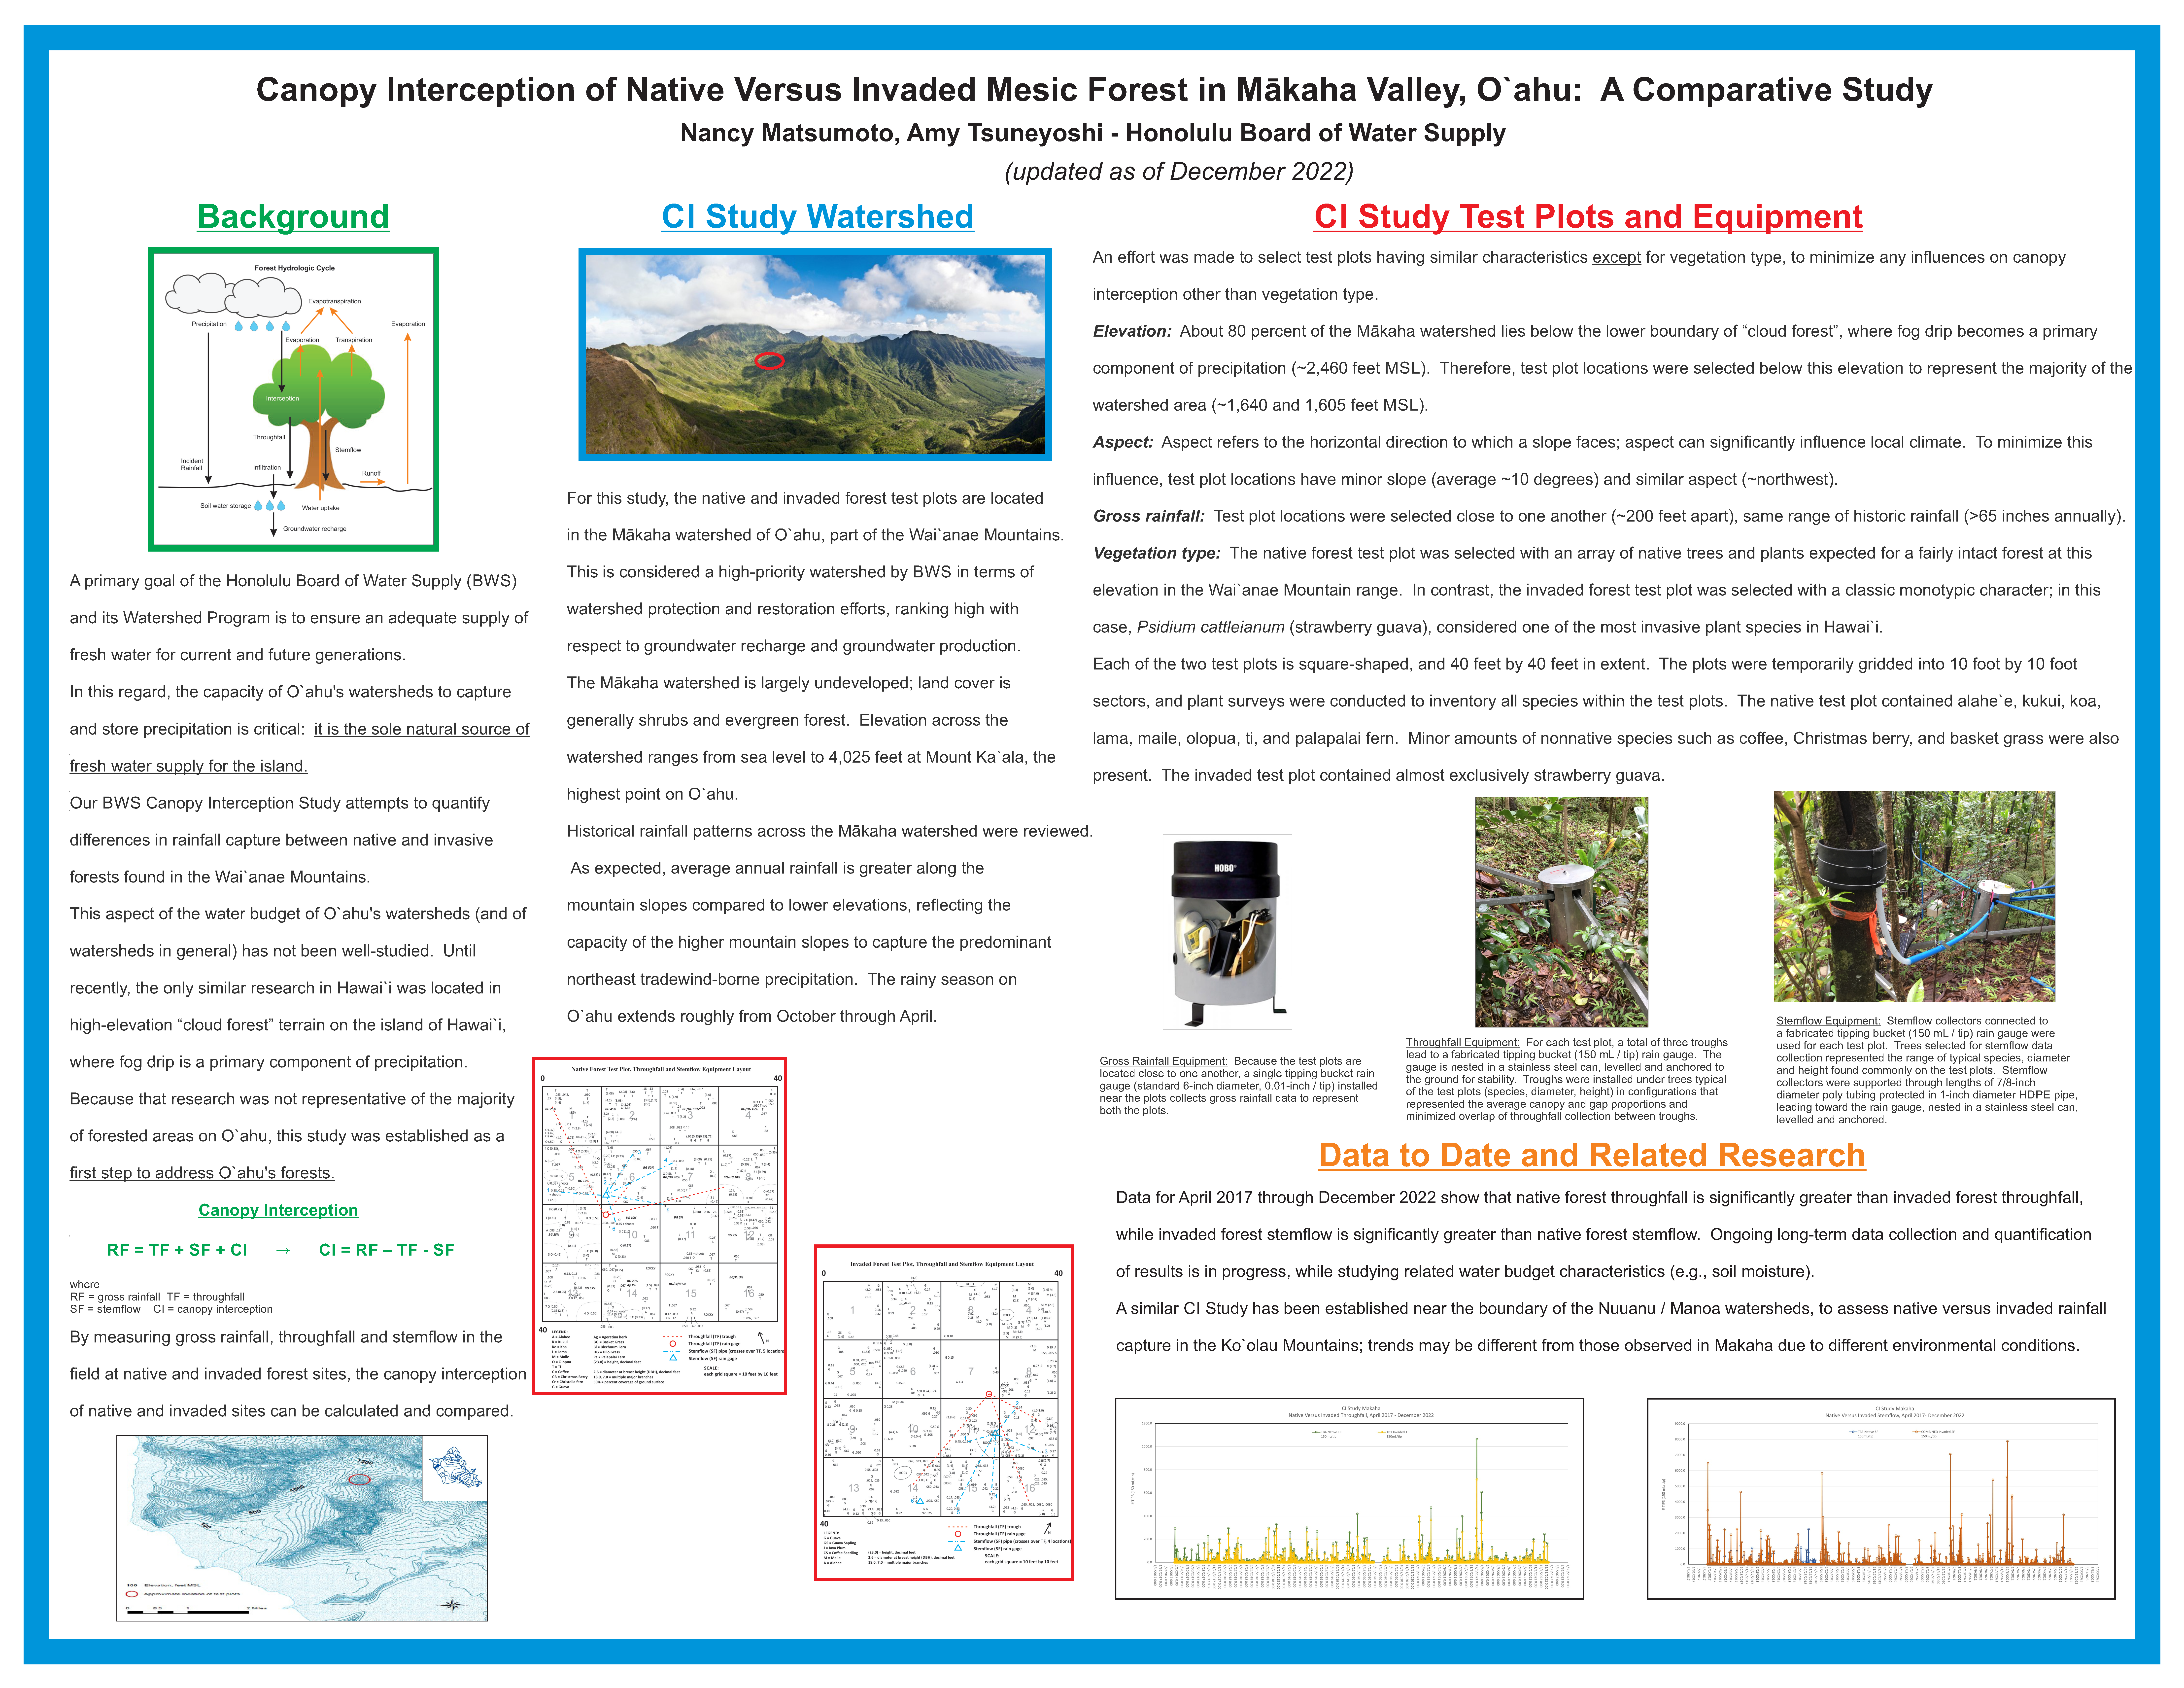 mahaka valley oahu rainfall canopy interception study poster 2018